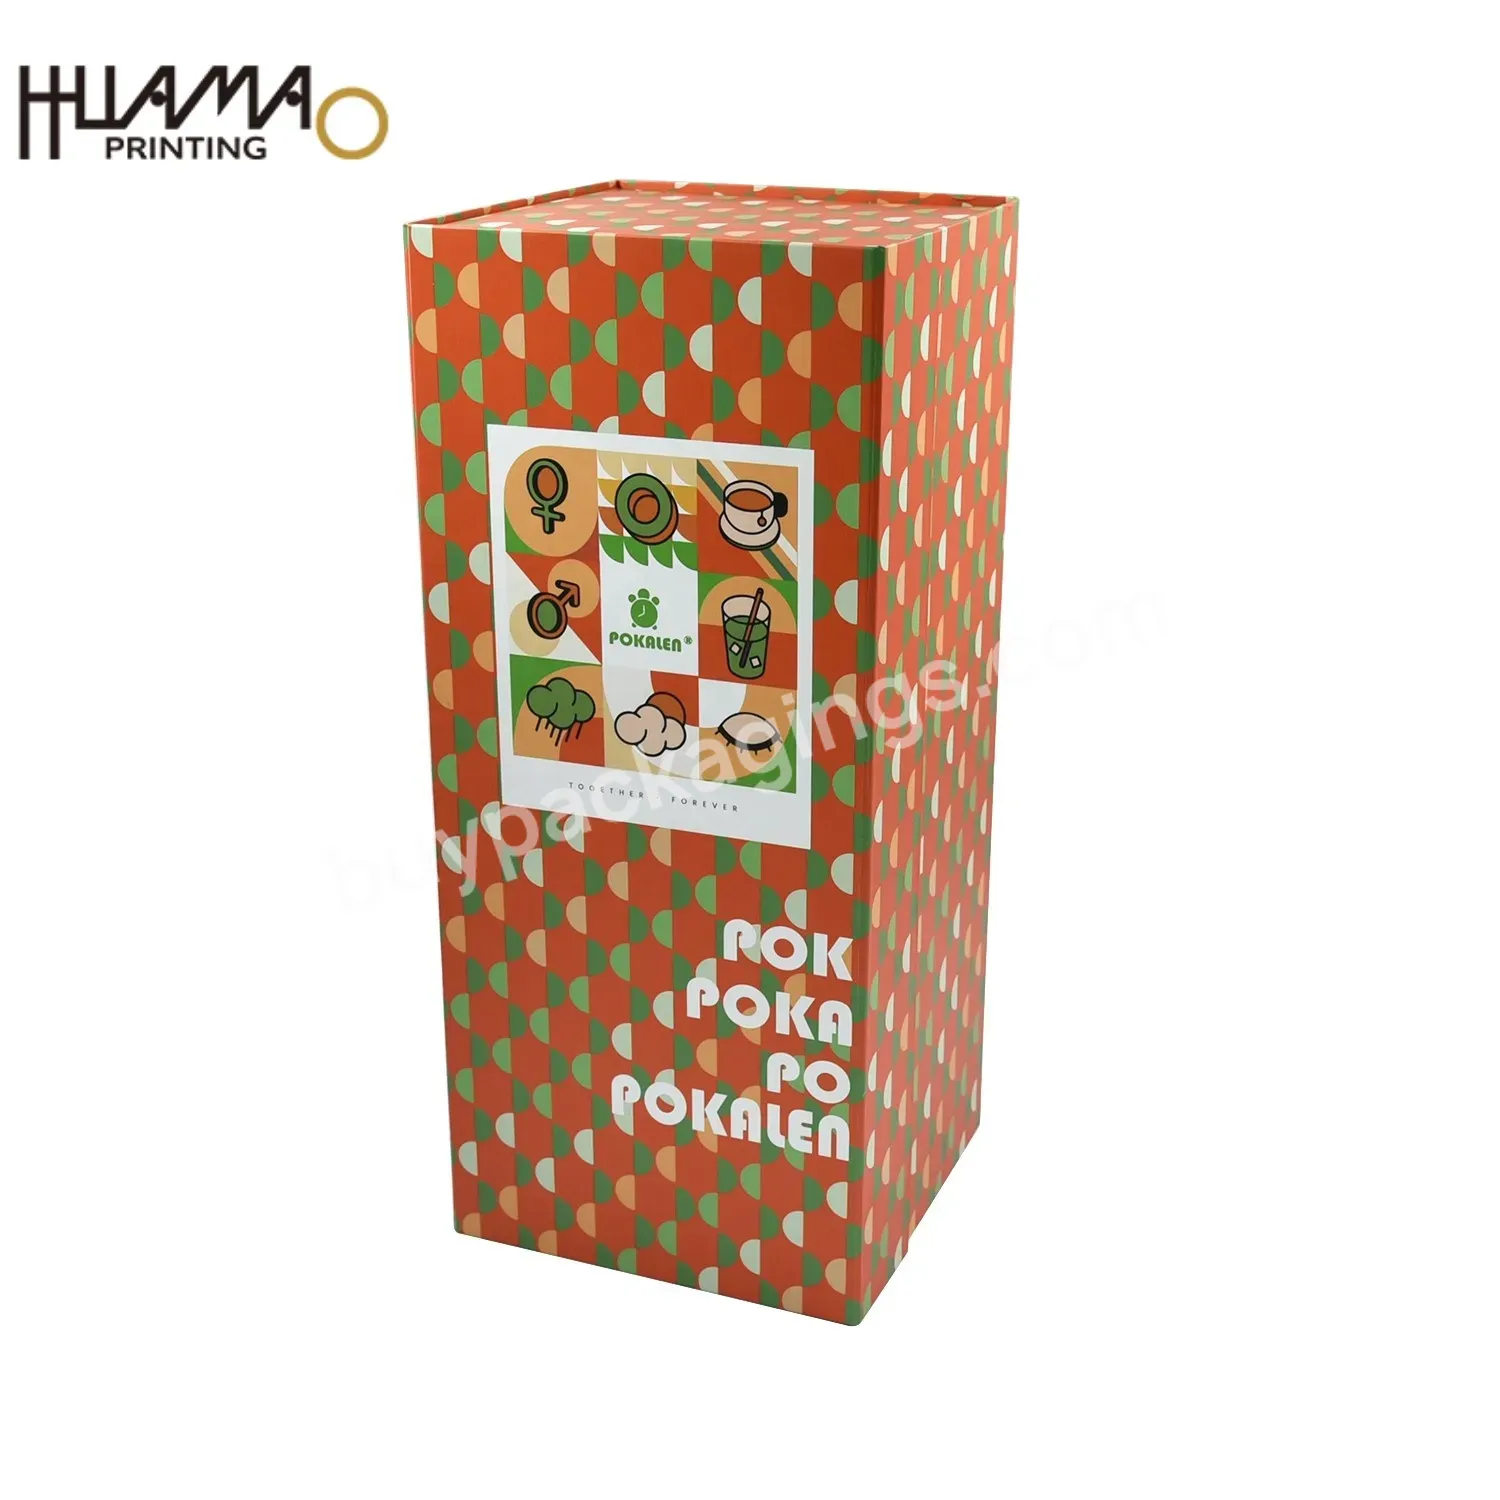 Huamao Grand Coffret Cadeau Caja De Pizza Biodegradable Bolsas De Papel Advent Calendar Box Caixa De Donut Magnetic Gift Box